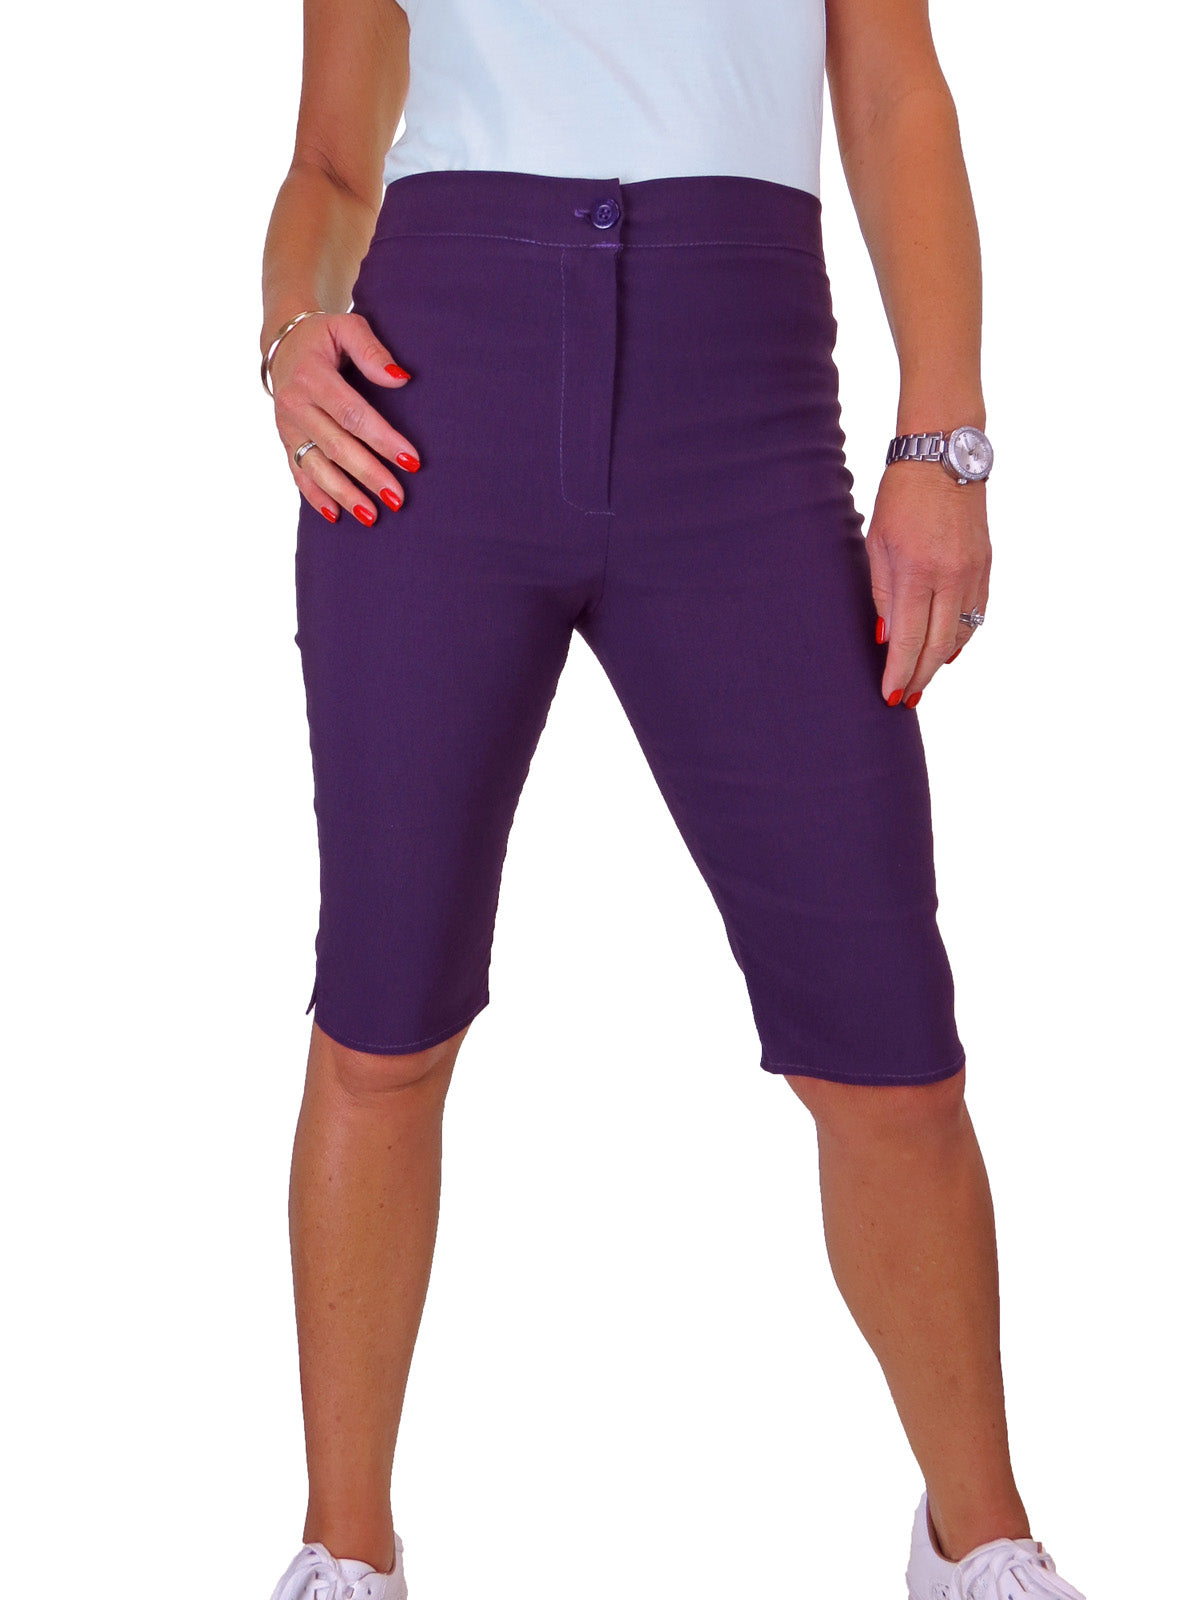 Womens High Waist Skinny Stretch Pedal Pusher Style Summer Shorts Aubergine Purple